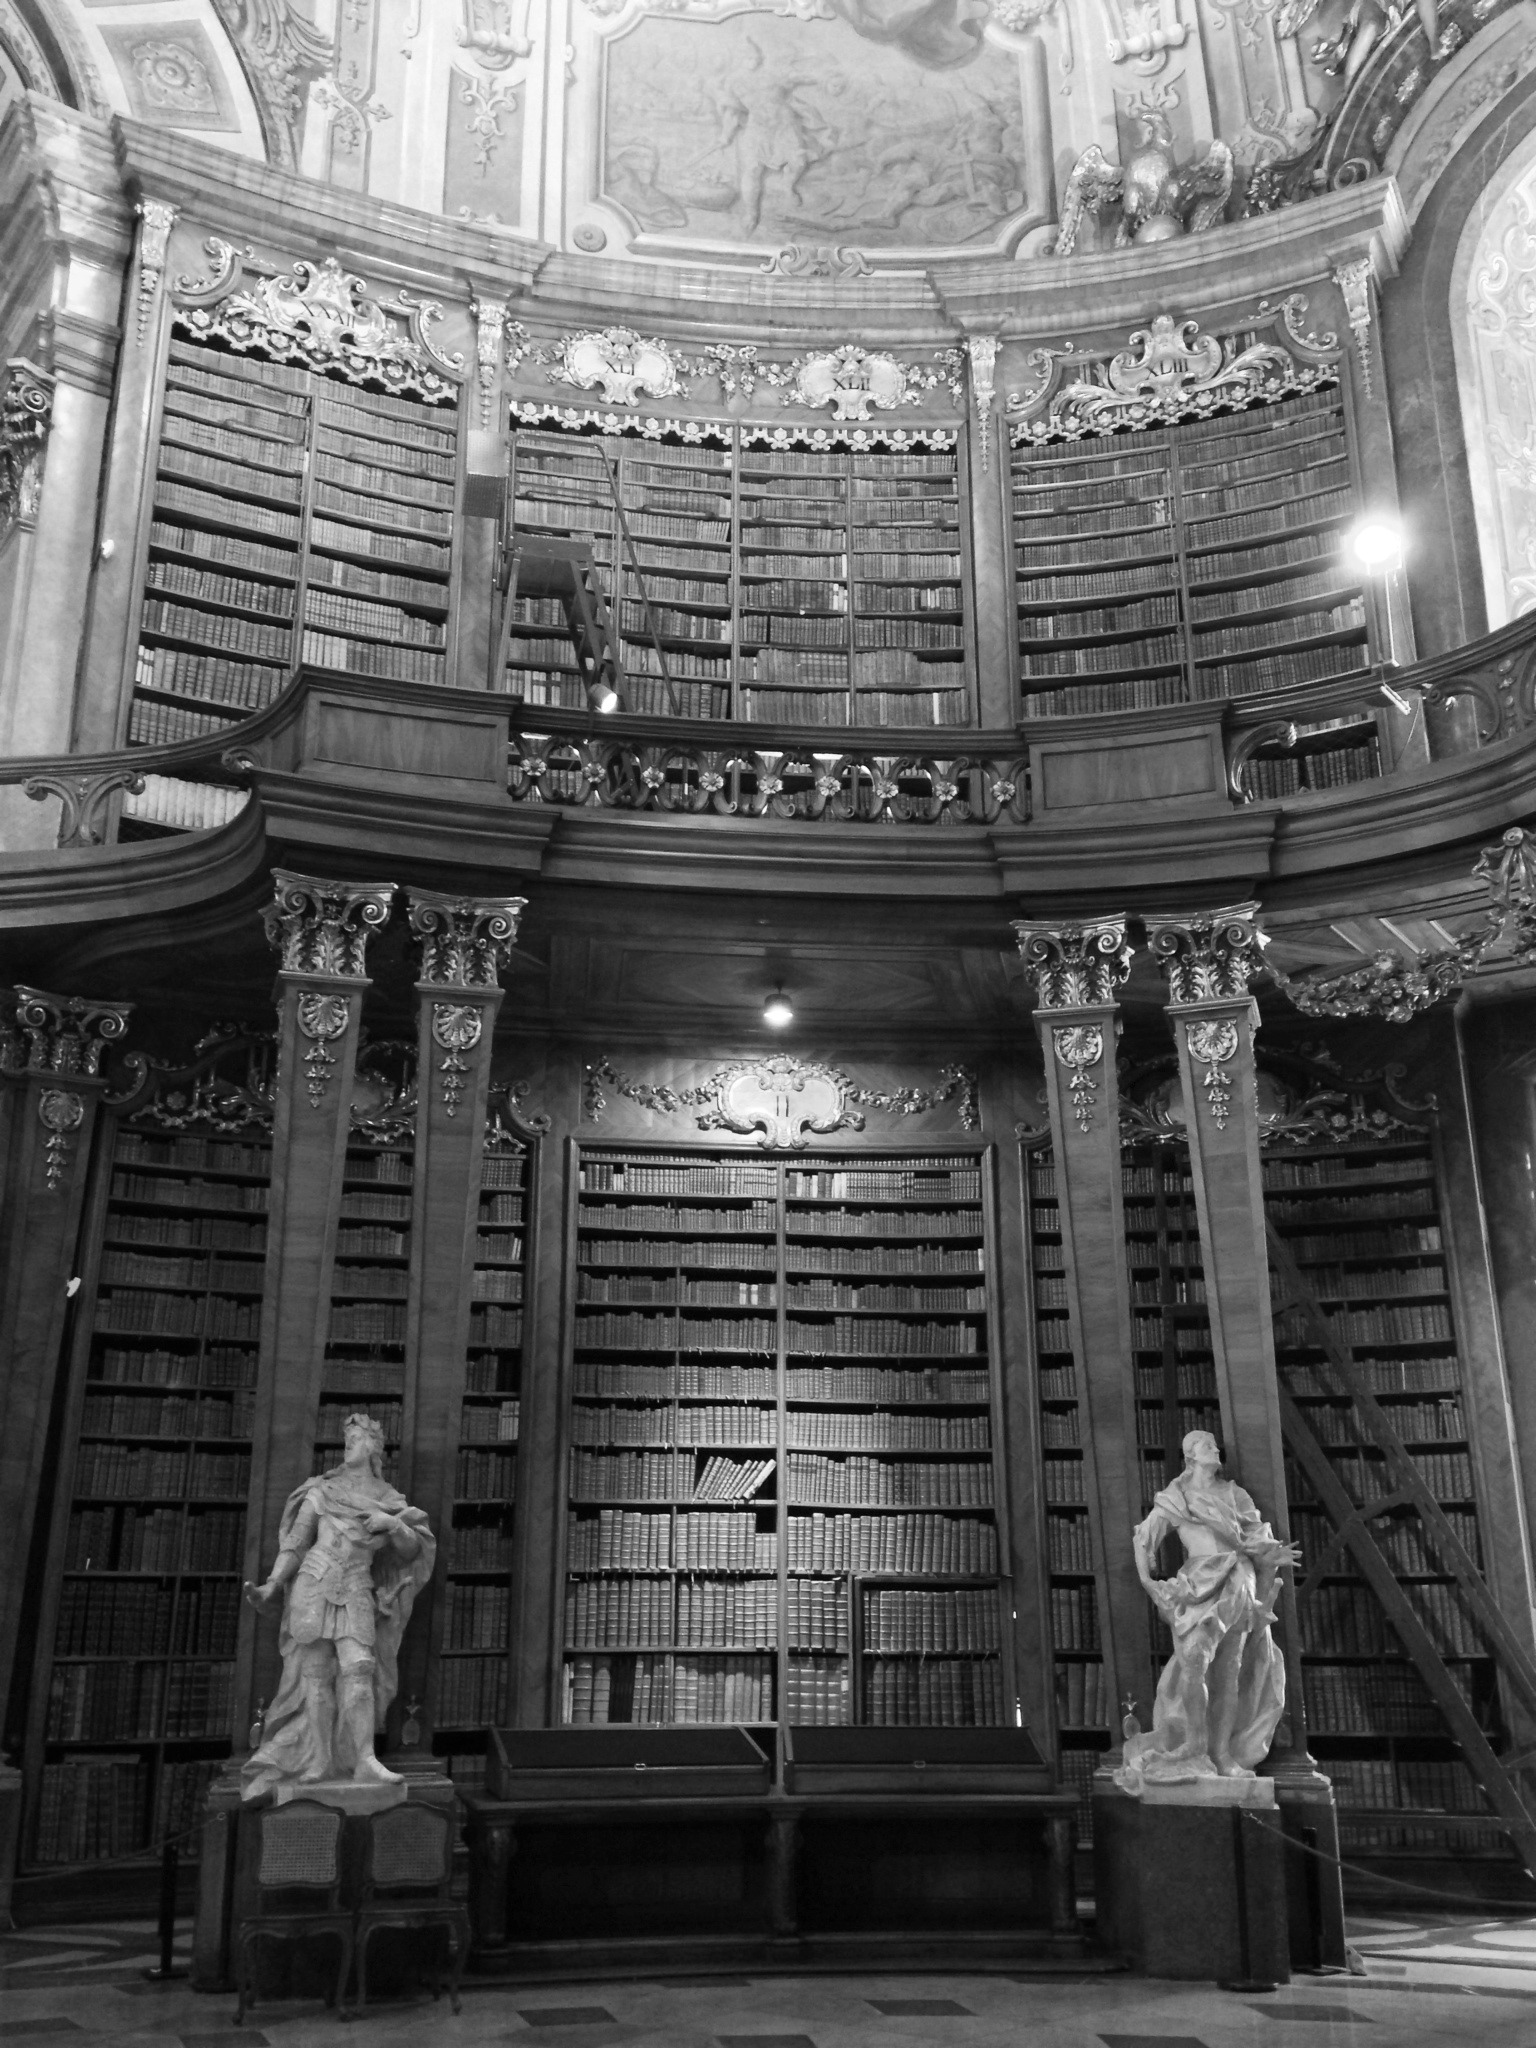 austrian national library state hall prunksaal vienna austria